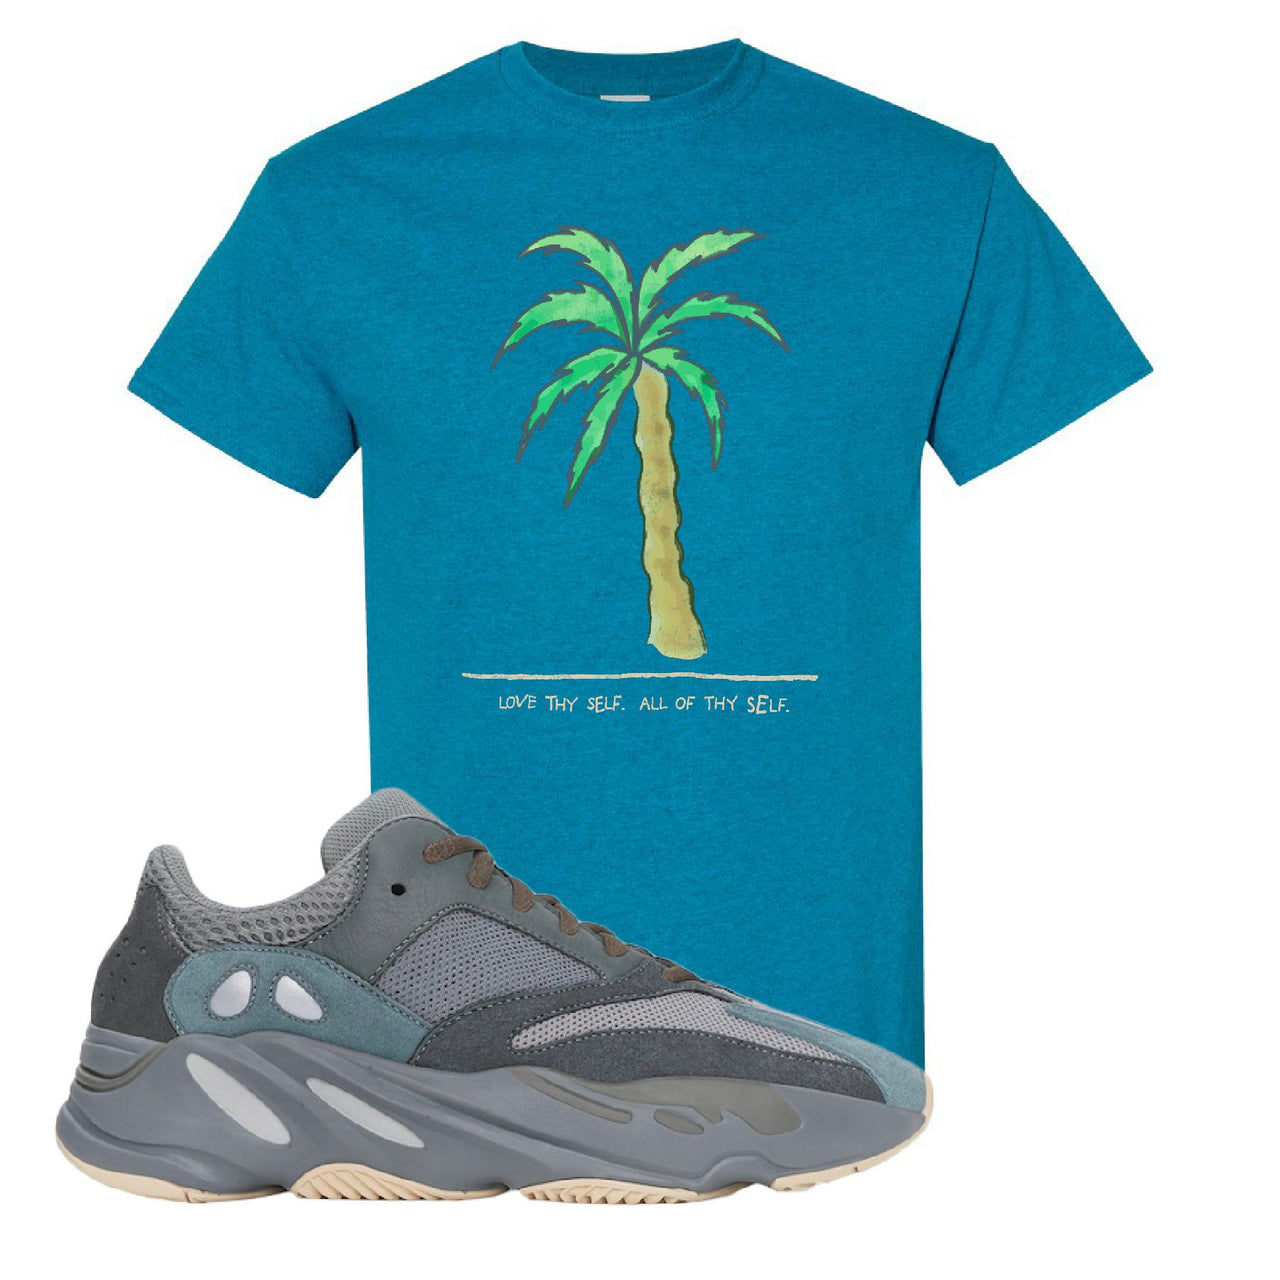 Yeezy Boost 700 Teal Blue Love Thyself Palm Antique Saphire Sneaker Hook Up T-Shirt